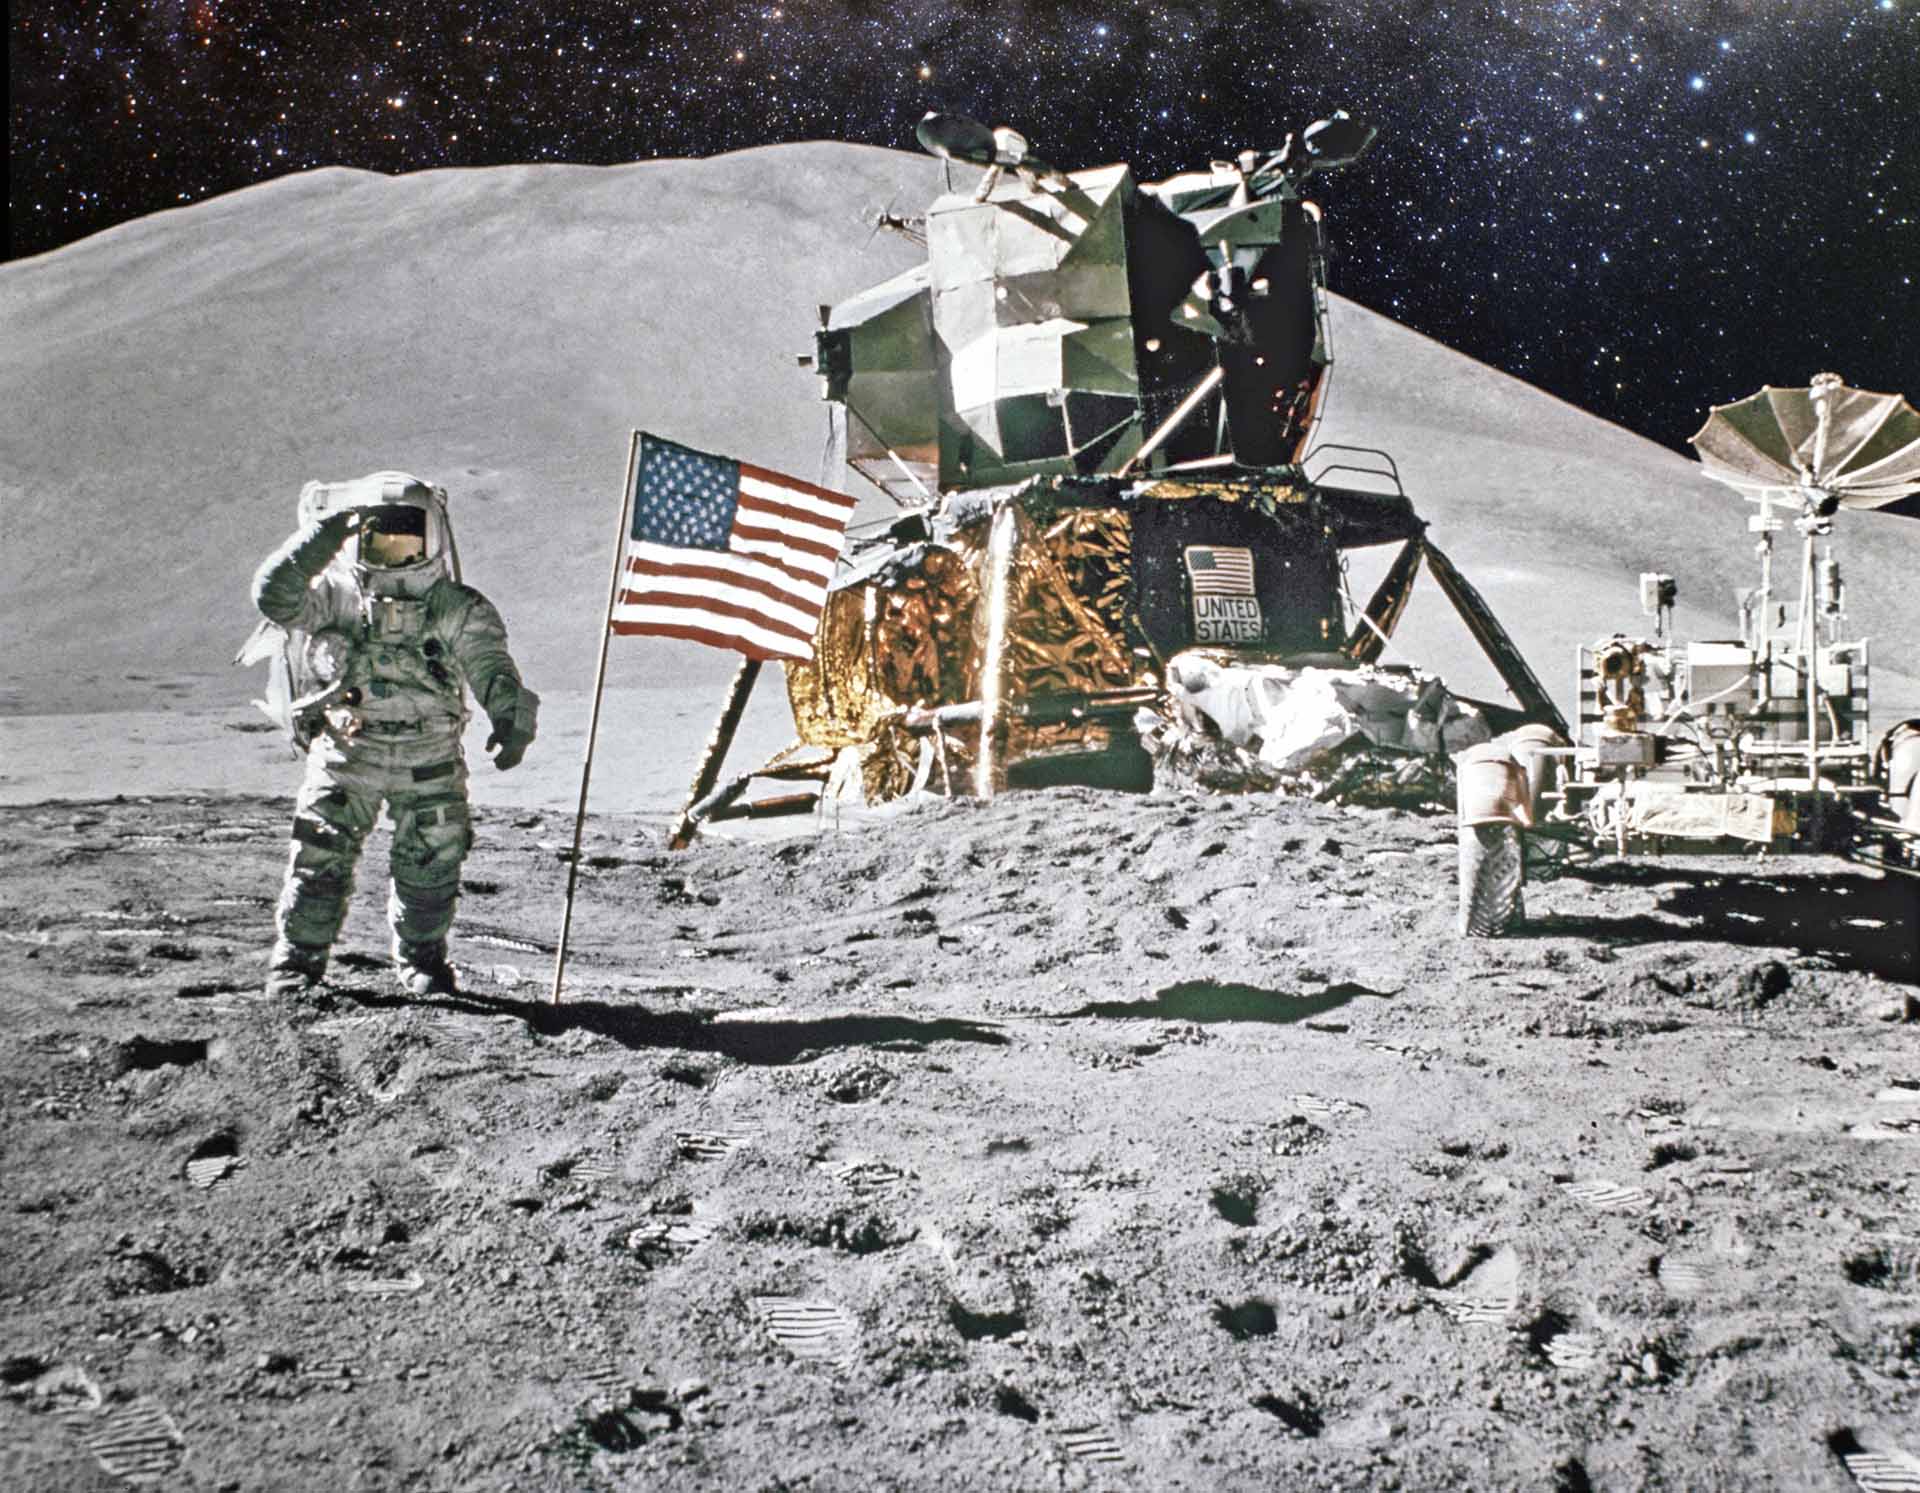 An astronaut on the surface of the Moon alongside the US flag, lunar lander and moon buggy.